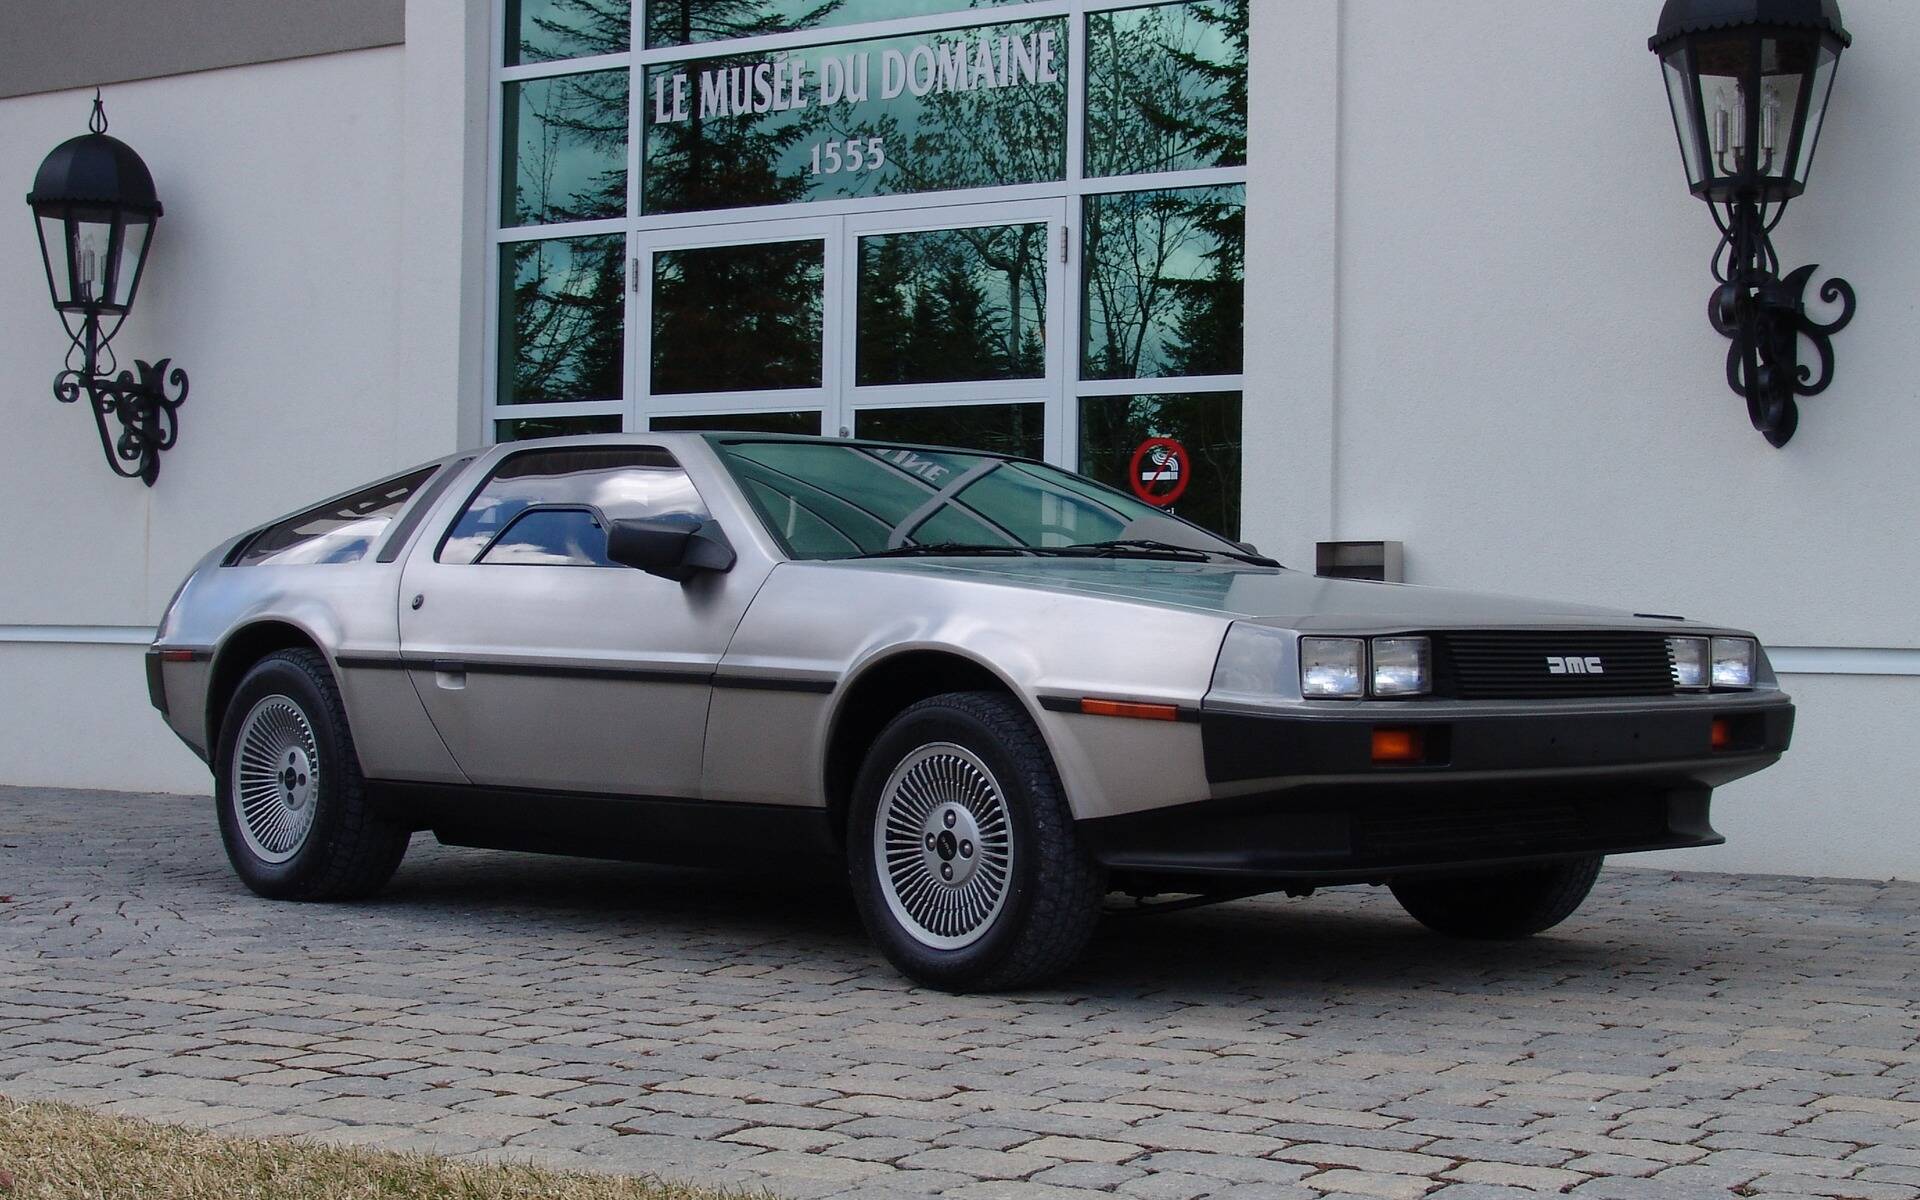 Il y a 40 ans, la première DeLorean sortait de l'usine - Guide Auto